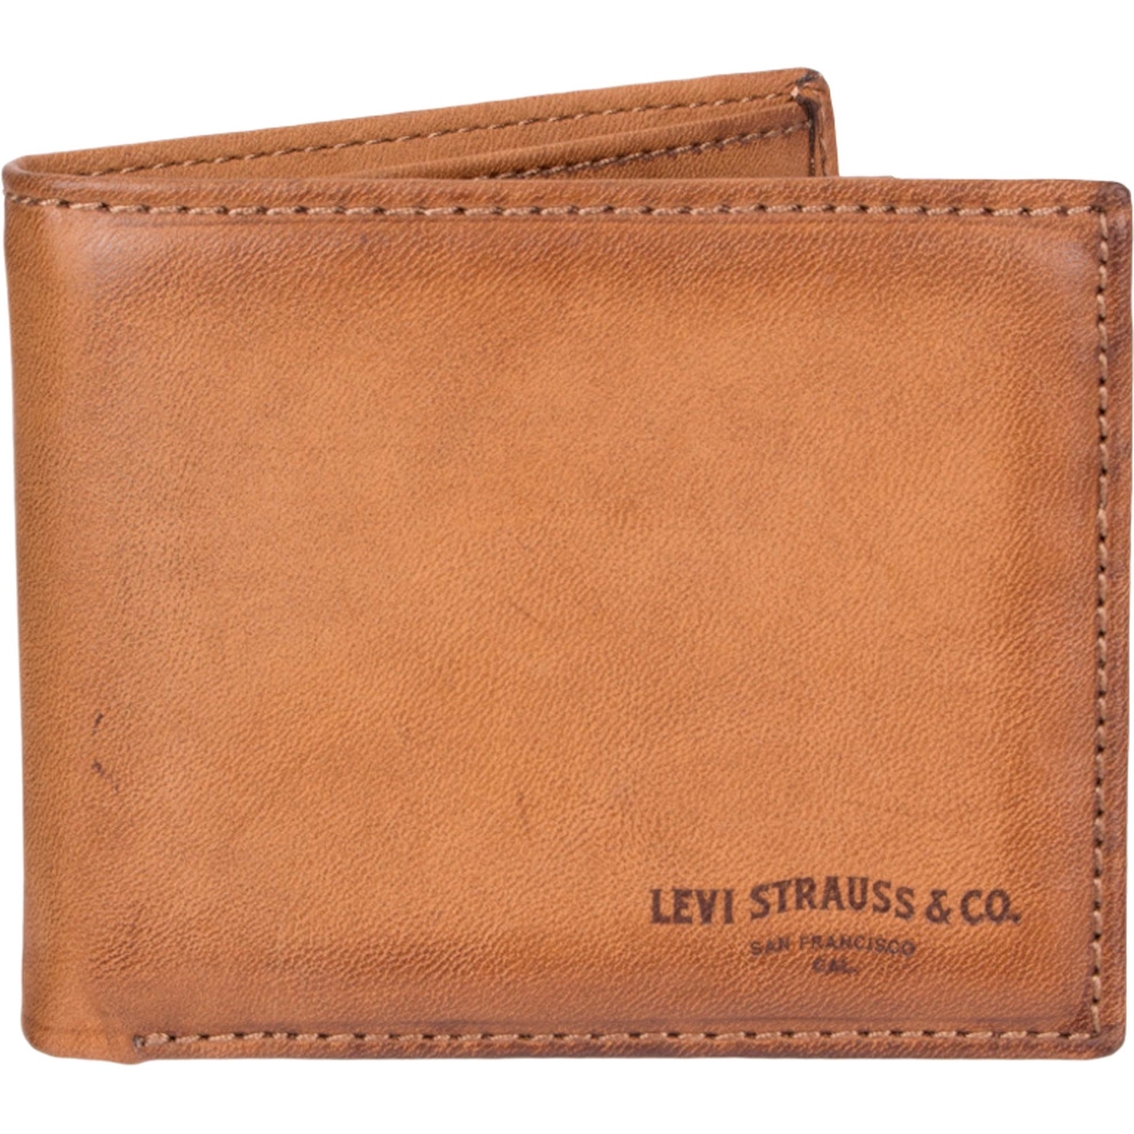 Levi's Rfid Extra Capacity Slimfold Wallet | Wallets | Clothing ...